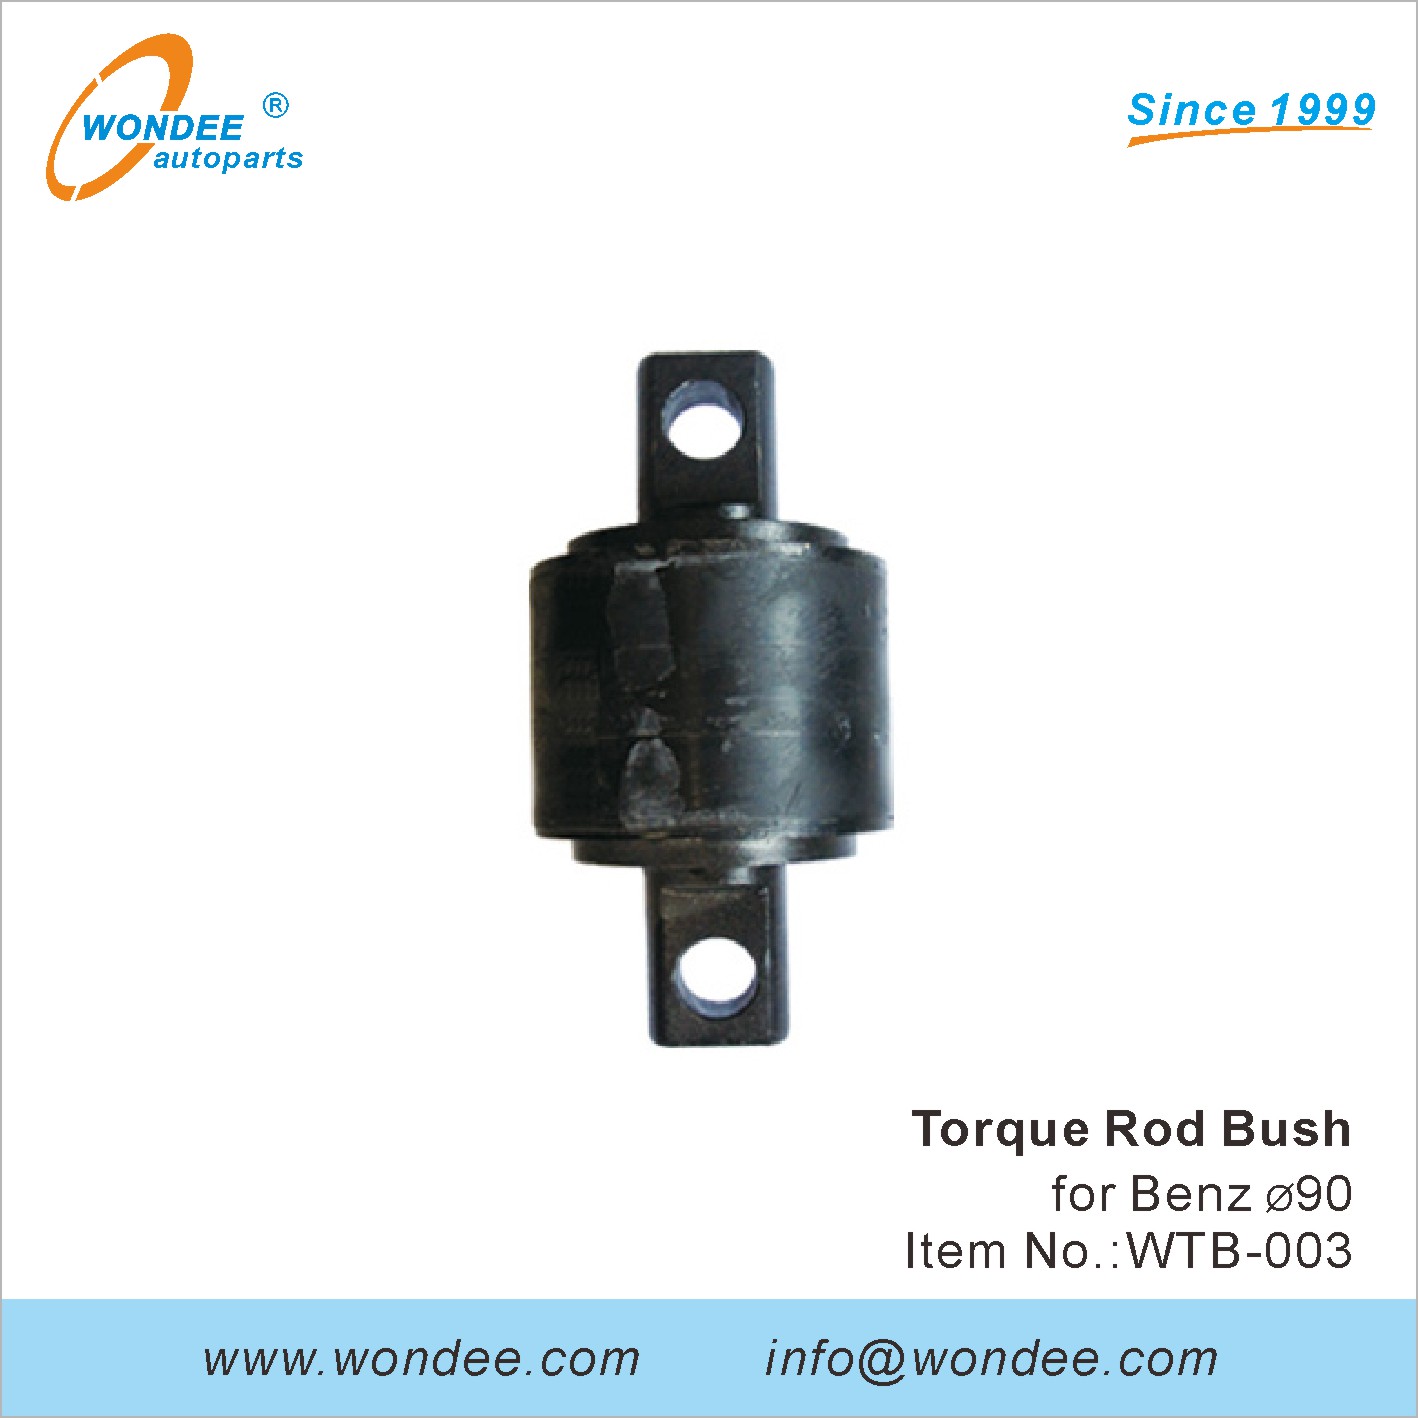 WONDEE torque rod bush (3)